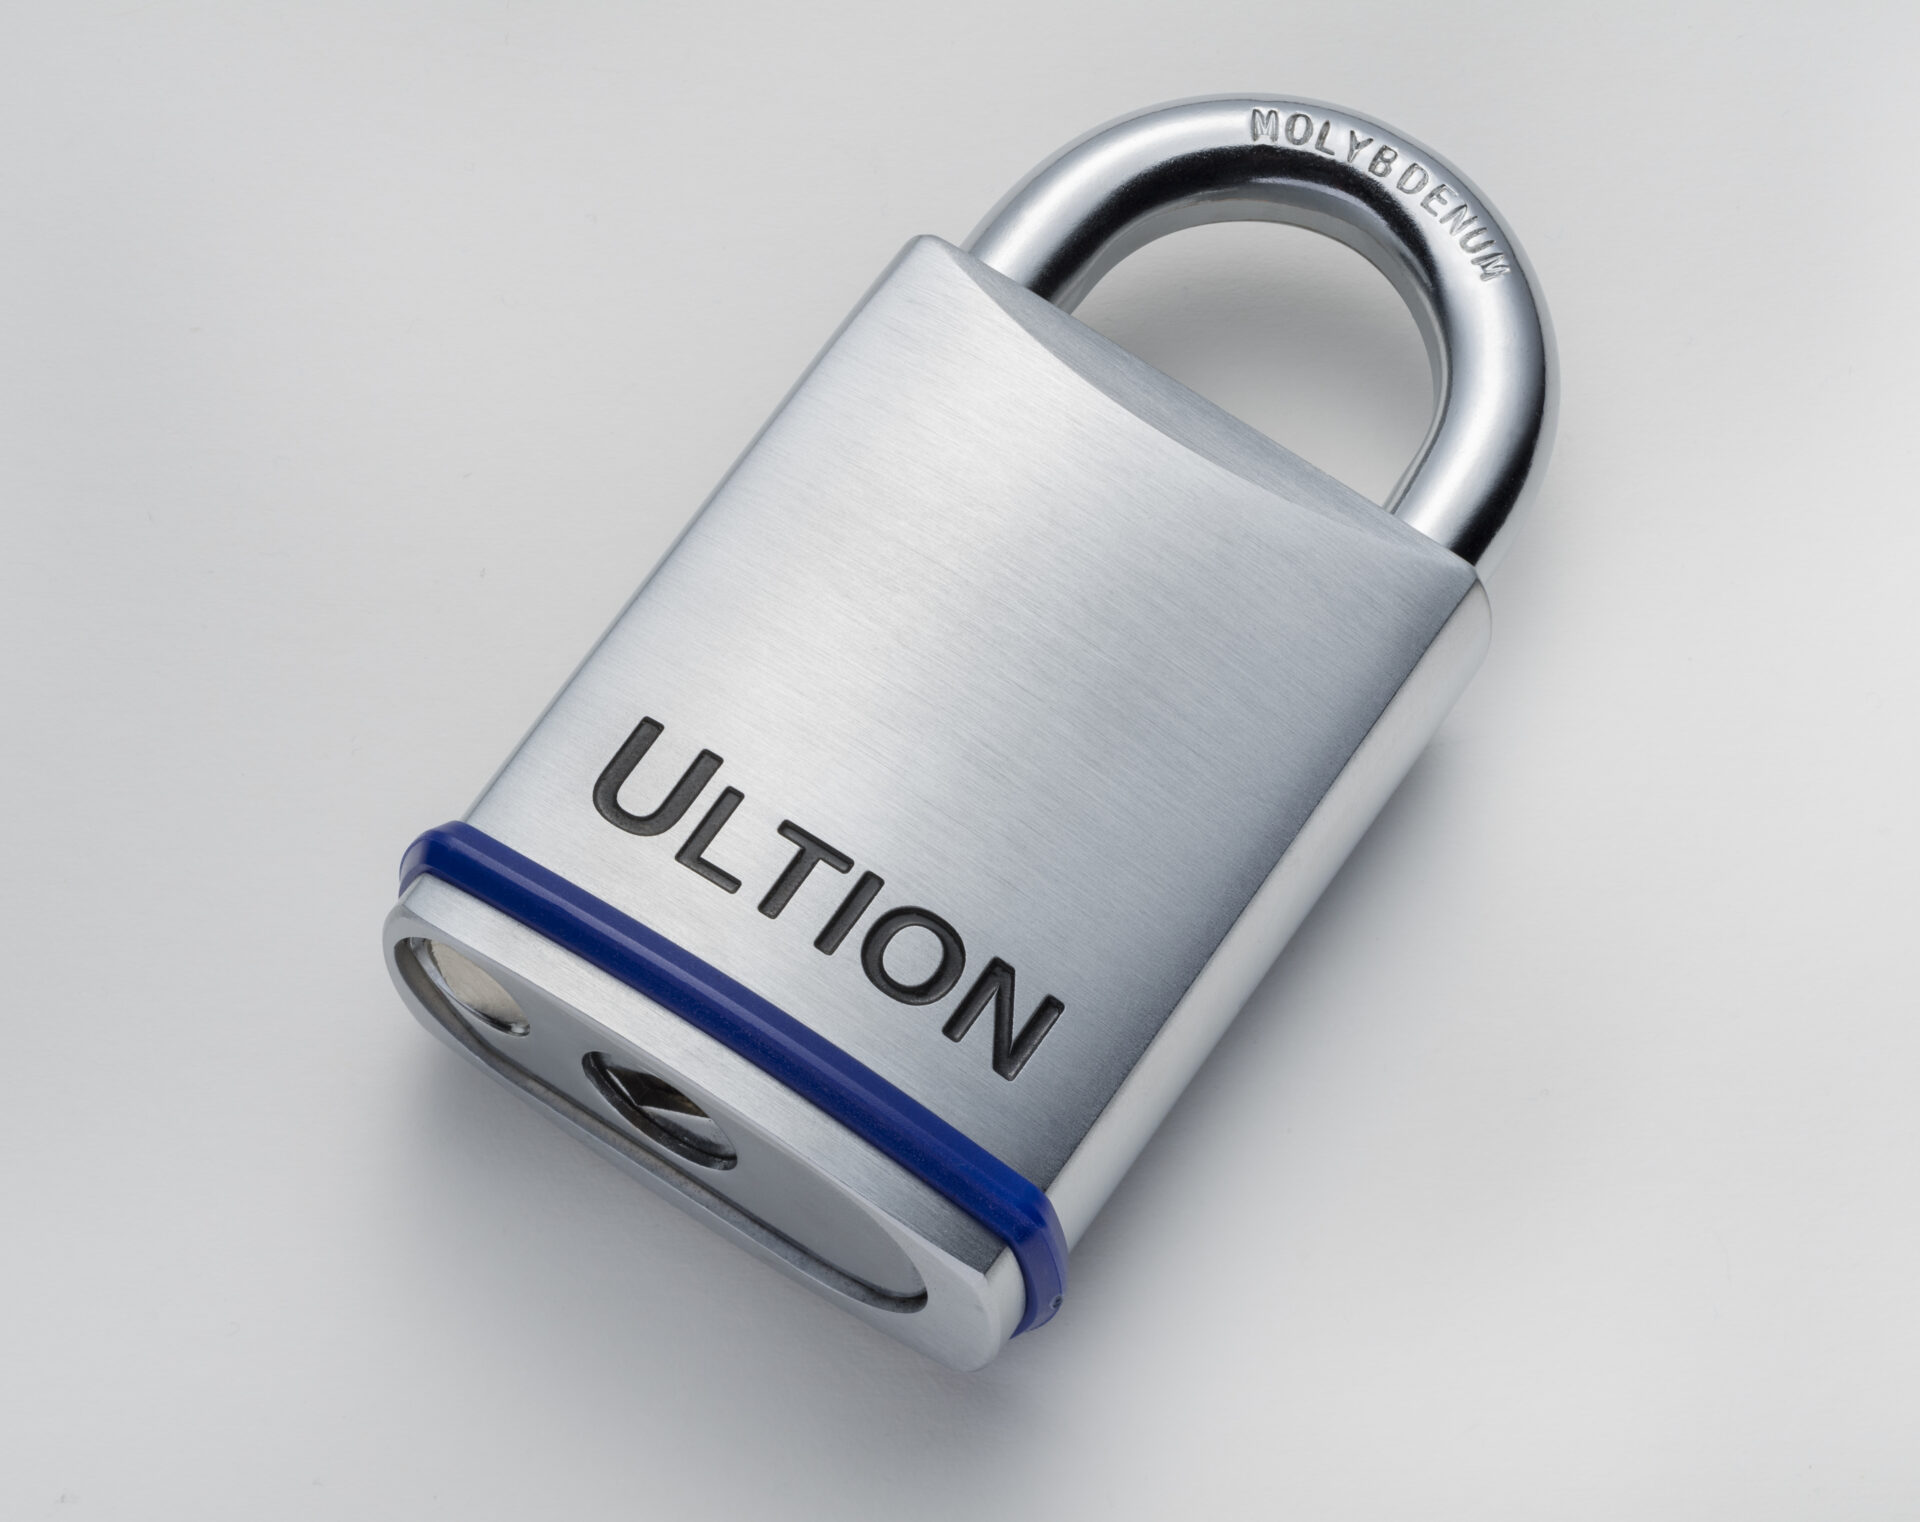 Guarantee Registration - Ultion Lock